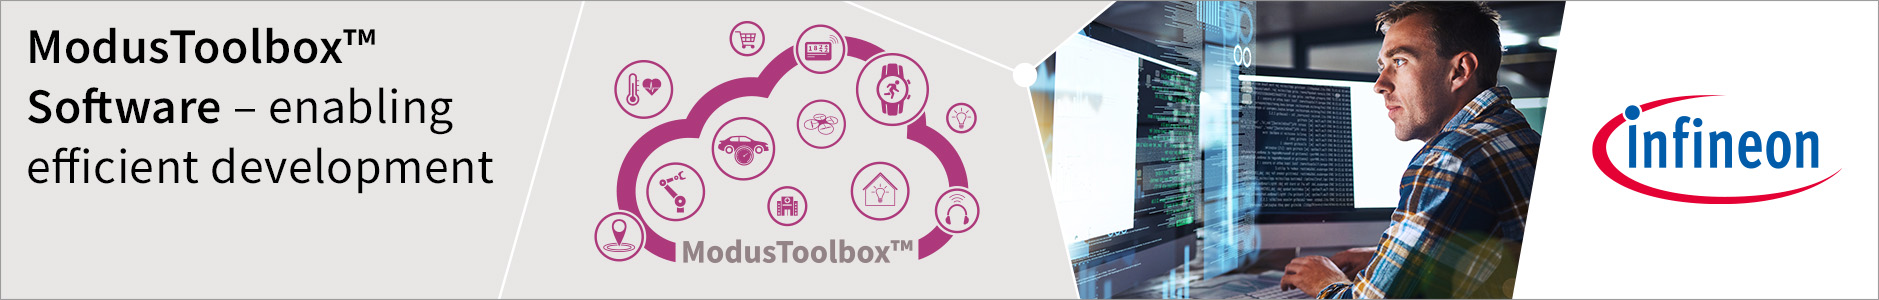 Infineon ModusToolbox™